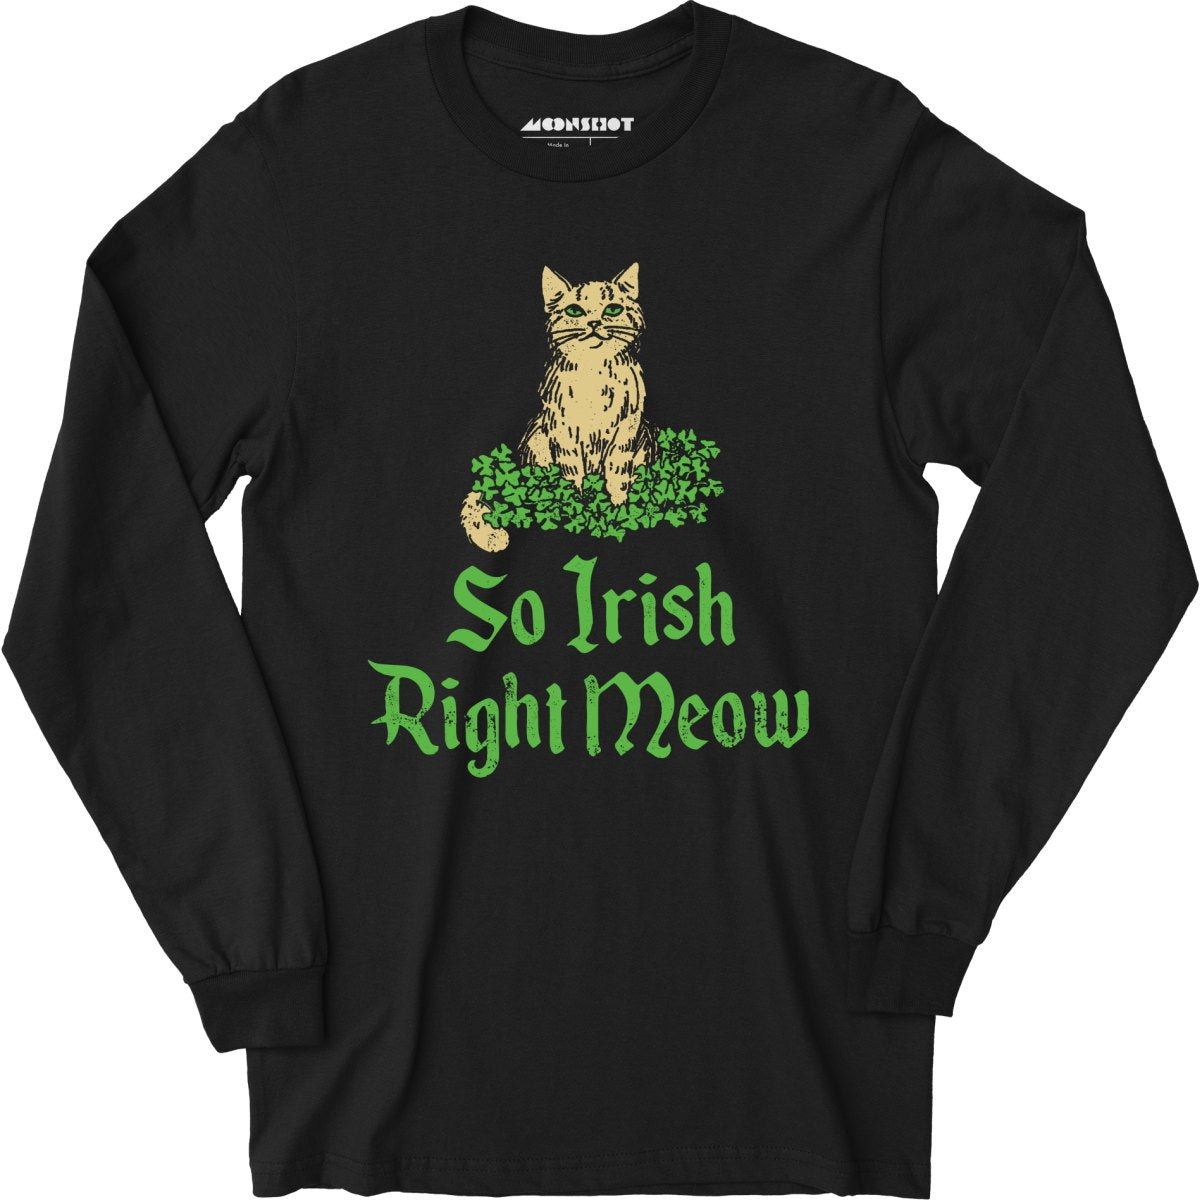 So Irish Right Meow - Long Sleeve T-Shirt